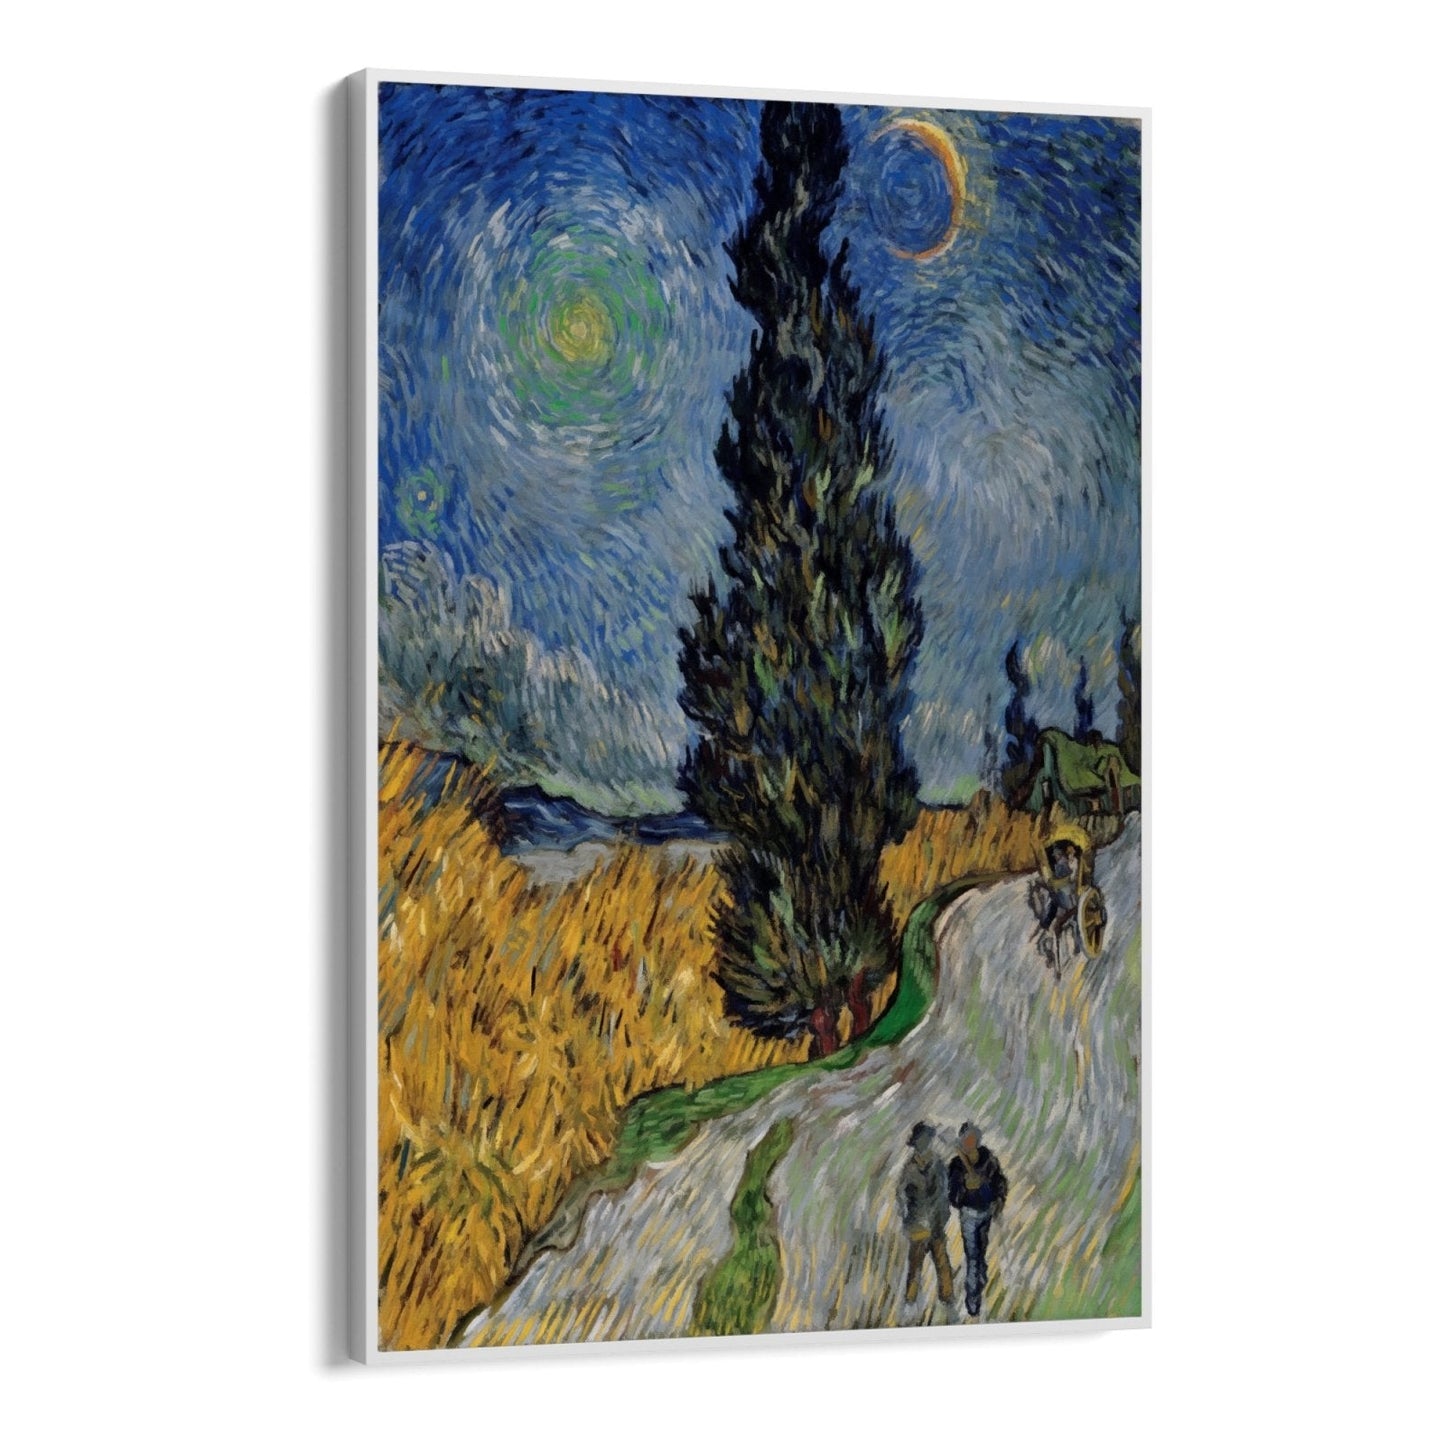 Tie sypressin ja tähden kanssa, Vincent Van Gogh